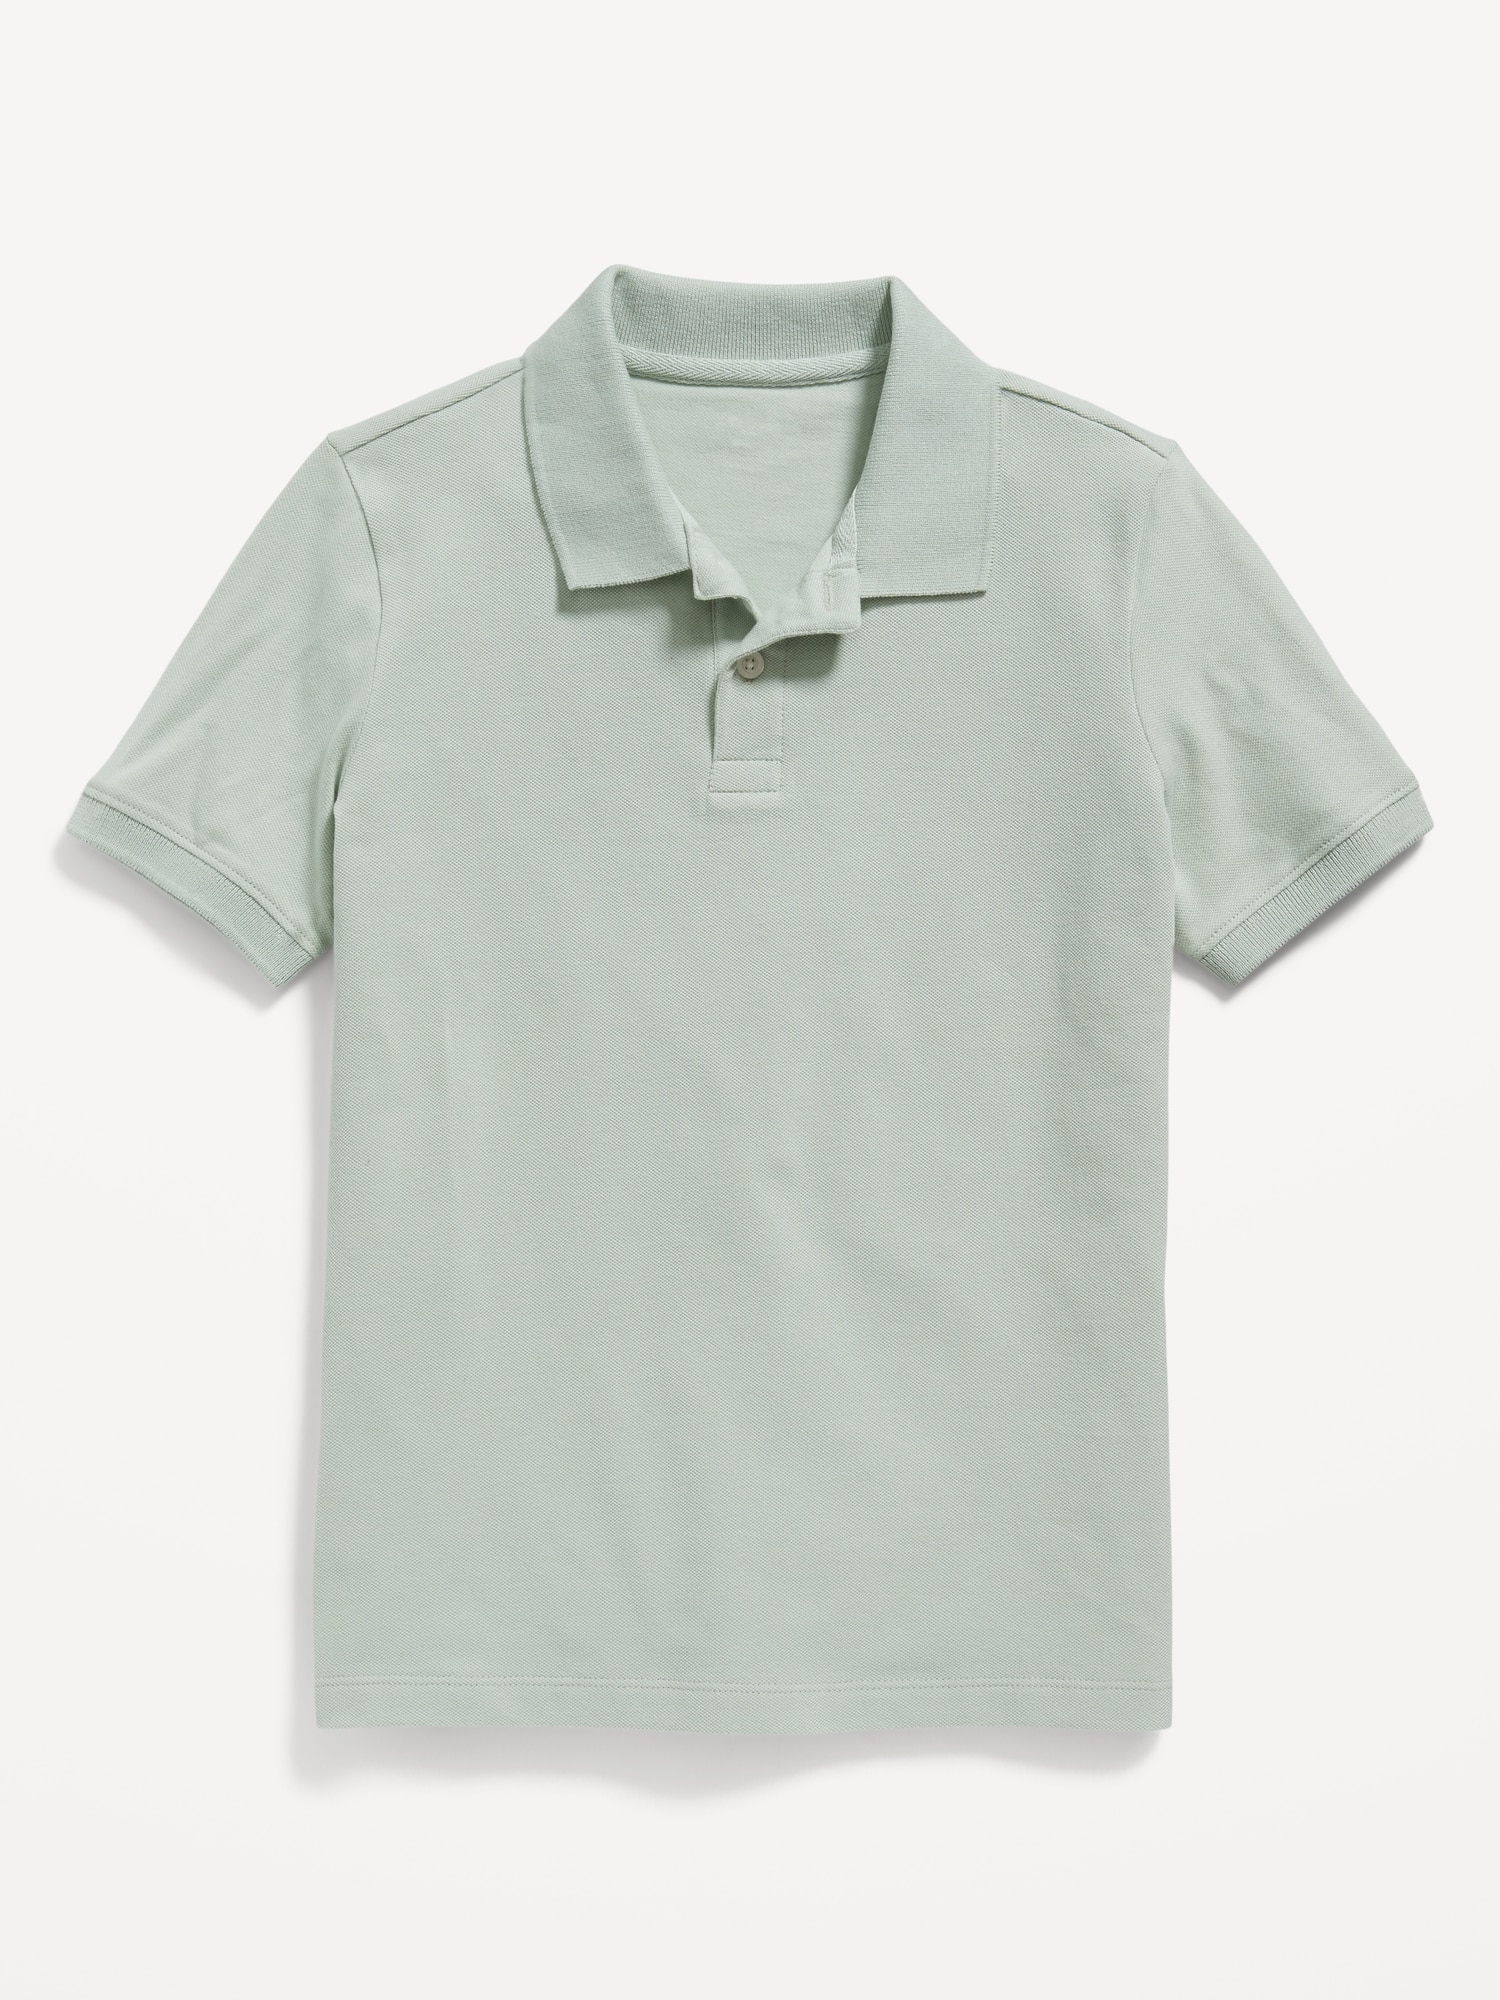 Old Navy School Uniform Built-In Flex Polo Shirt for Boys green. 1